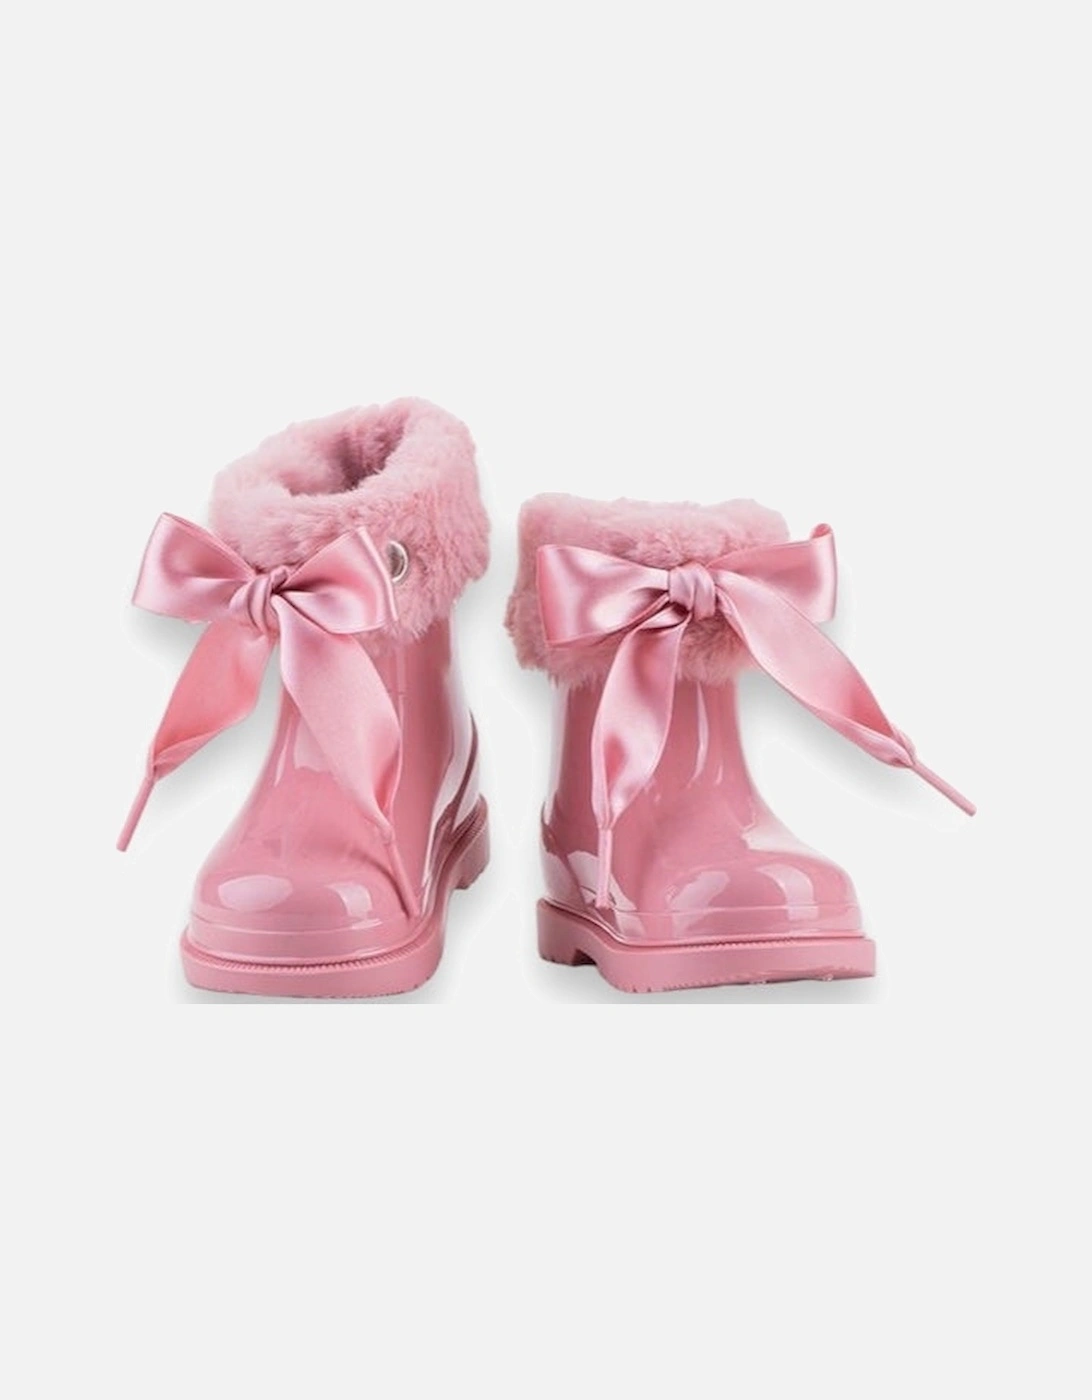 Dusty Pink Faux Fur Boots